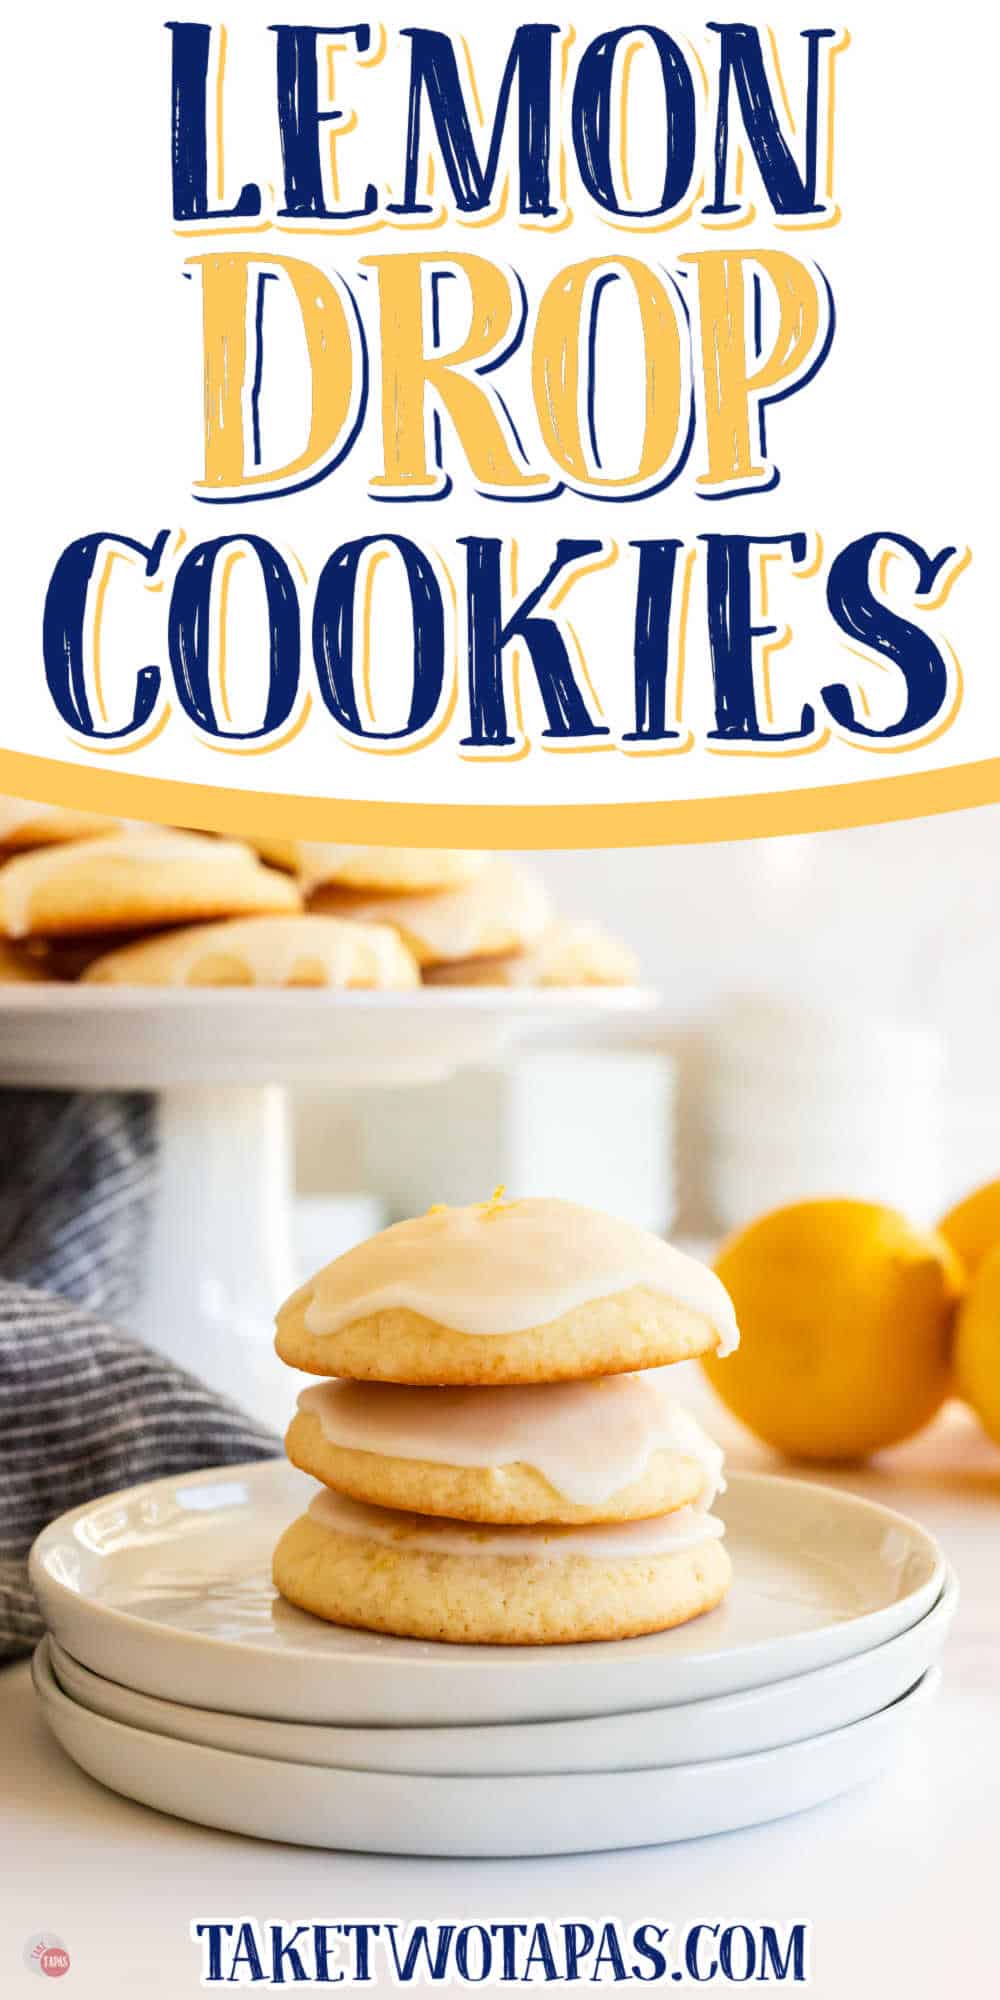 stack of cookies with text "lemon drop cookies"